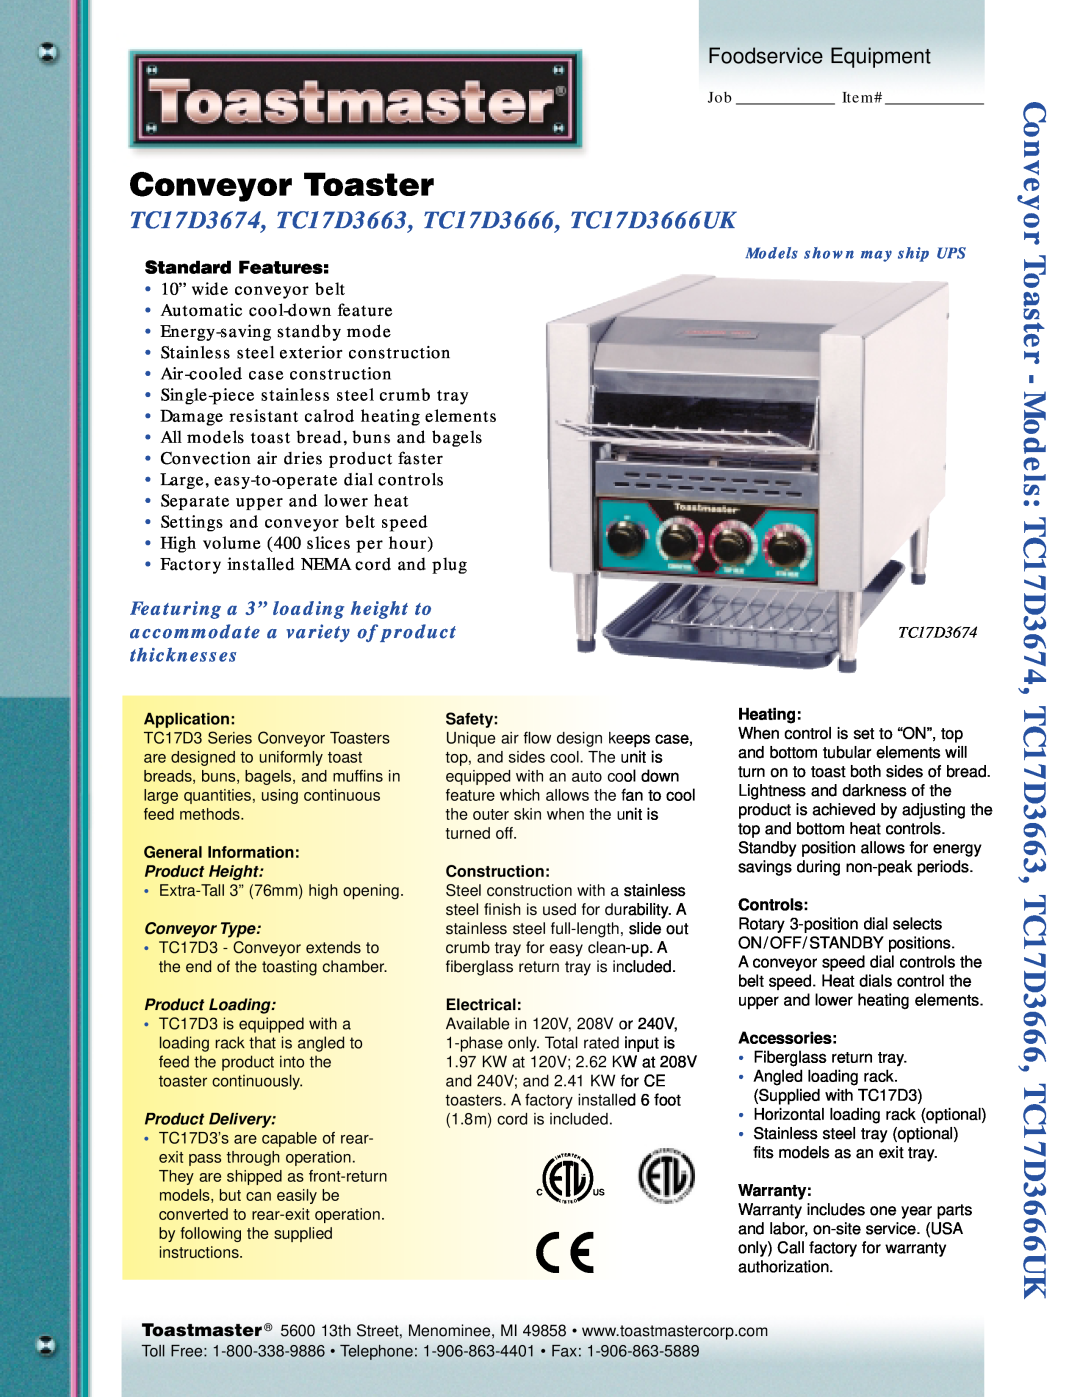 Toastmaster TC17D3666UK warranty Standard Features, Conveyor Toaster - Models TC17D3674, Foodservice Equipment 